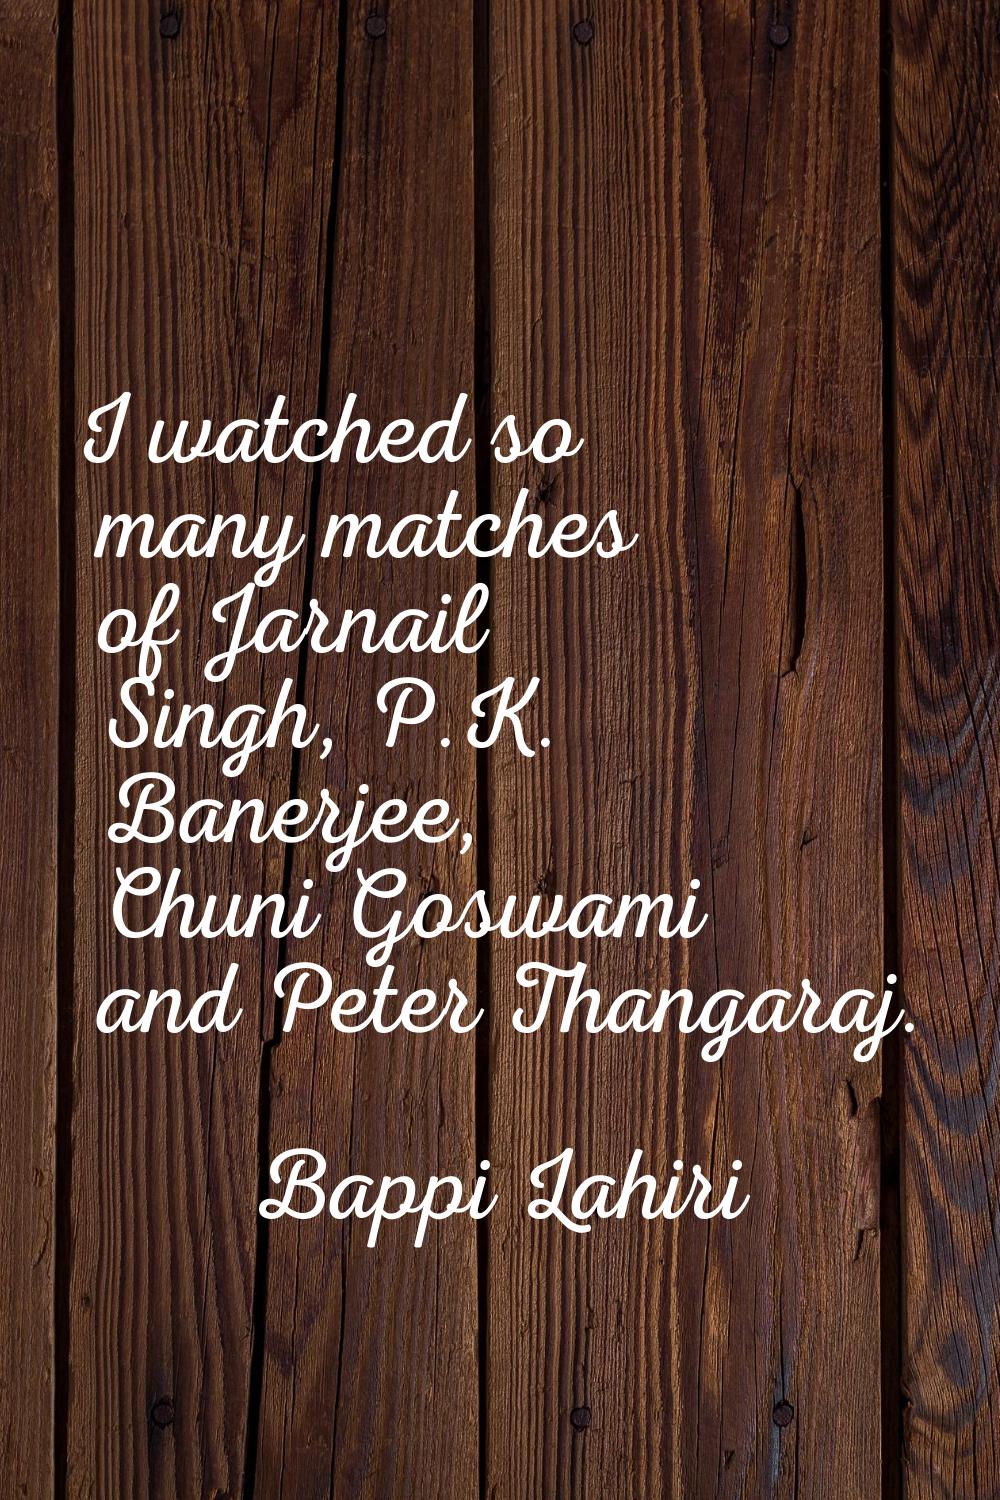 I watched so many matches of Jarnail Singh, P.K. Banerjee, Chuni Goswami and Peter Thangaraj.